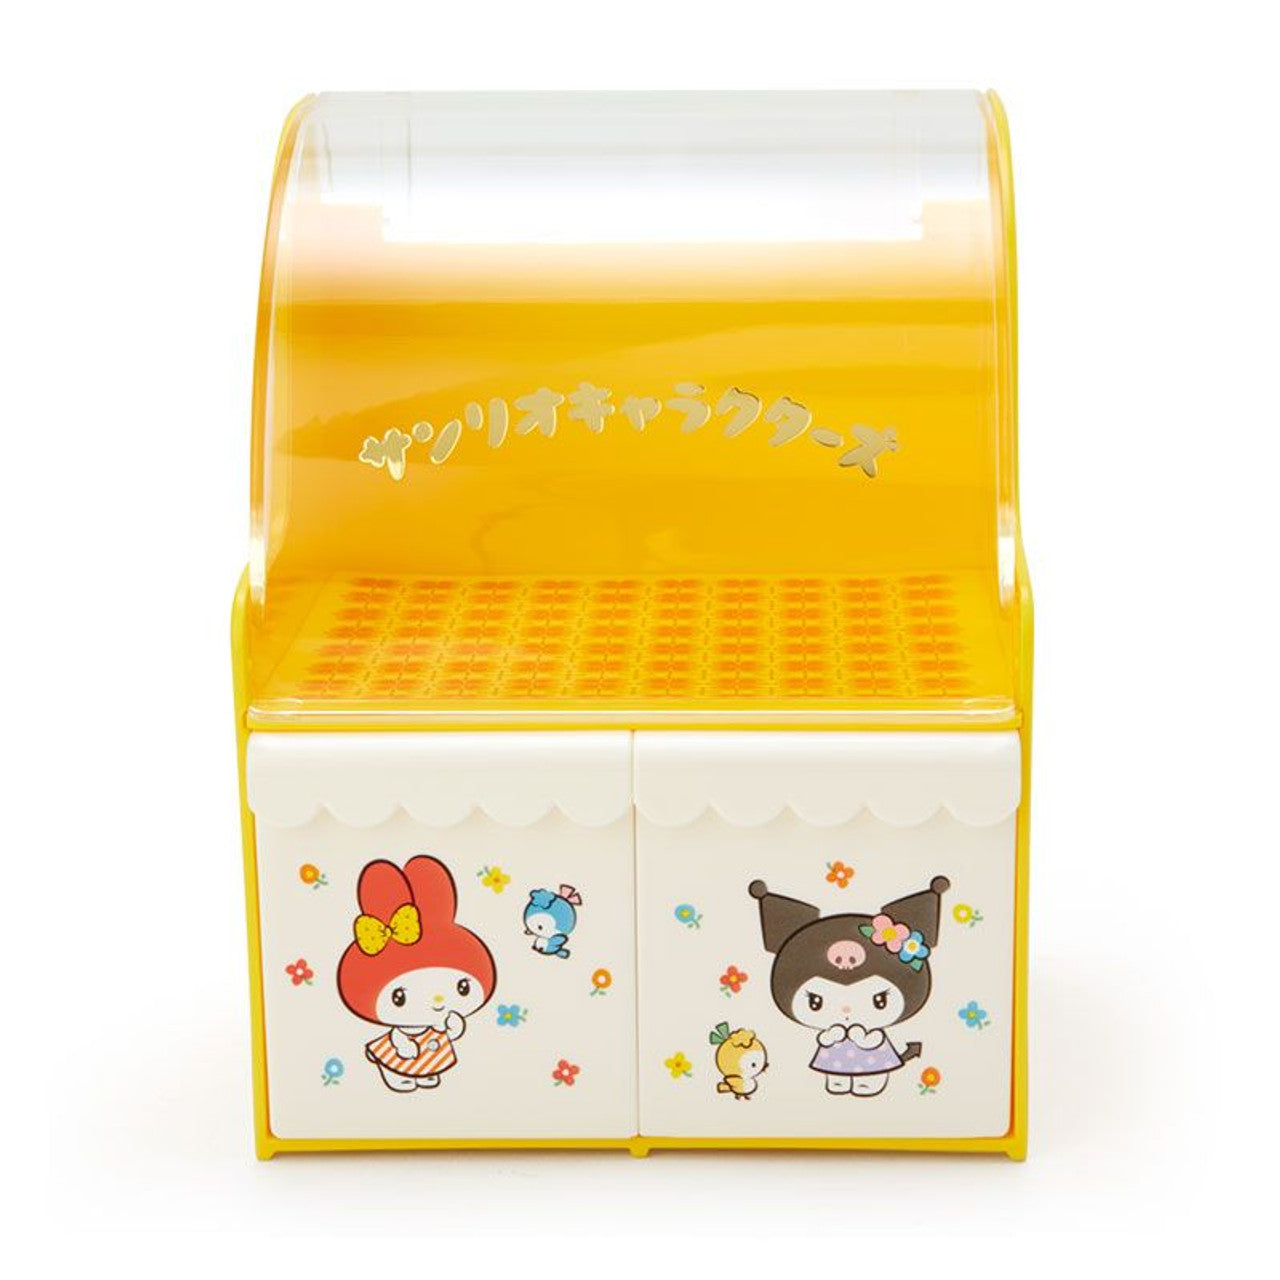 Sanrio Characters Mini Yellow Storage Chest (Retro Room Series) Home Goods Japan Original   